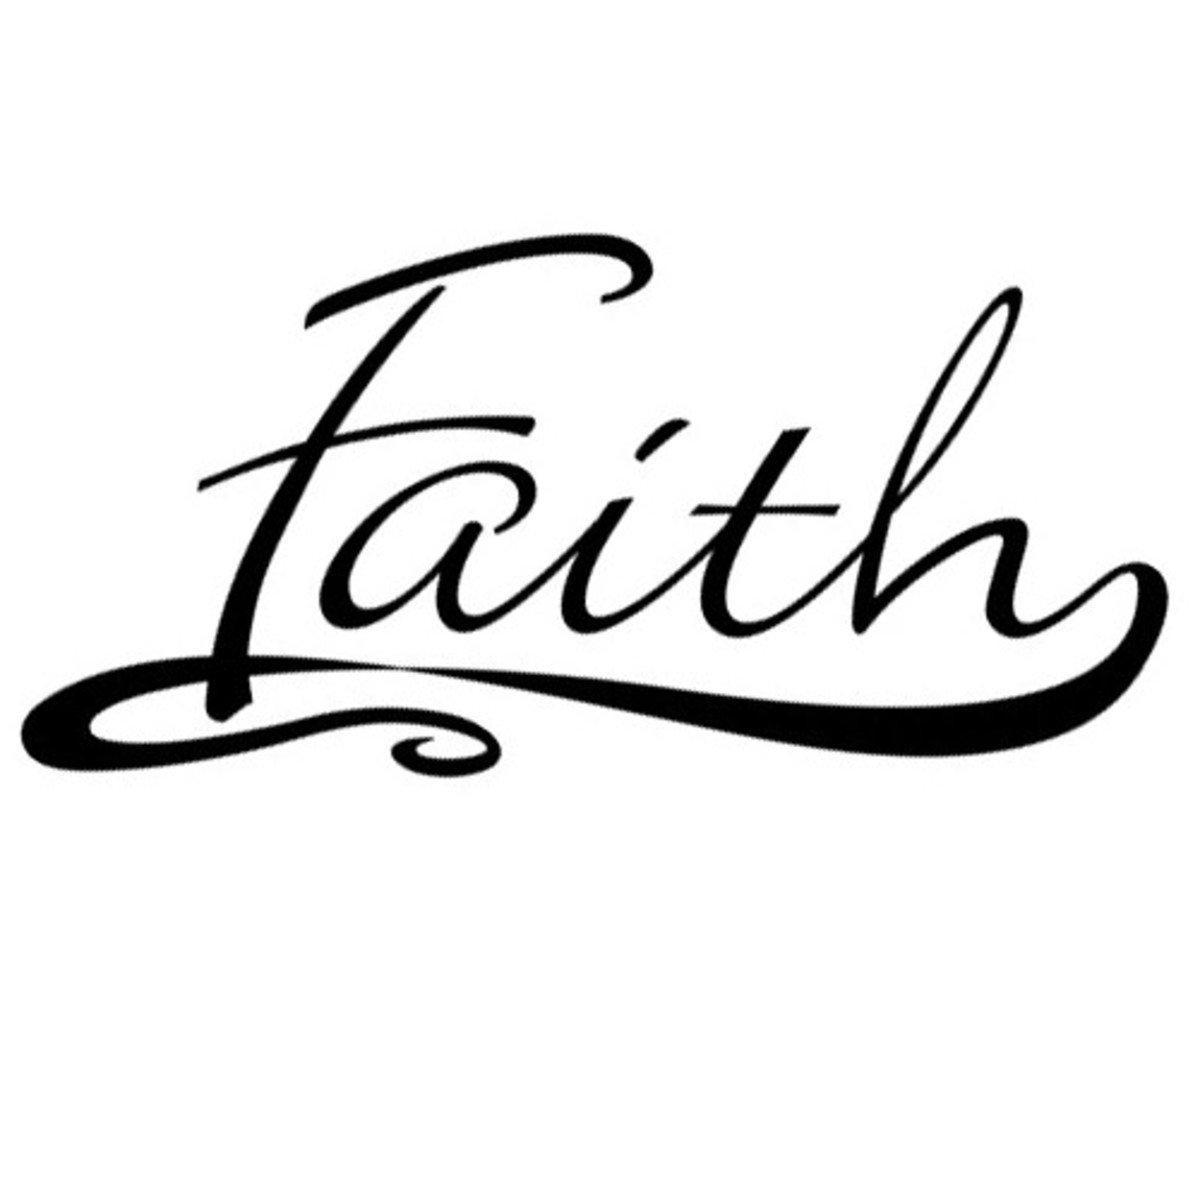 metaphors-for-faith-and-god-belief